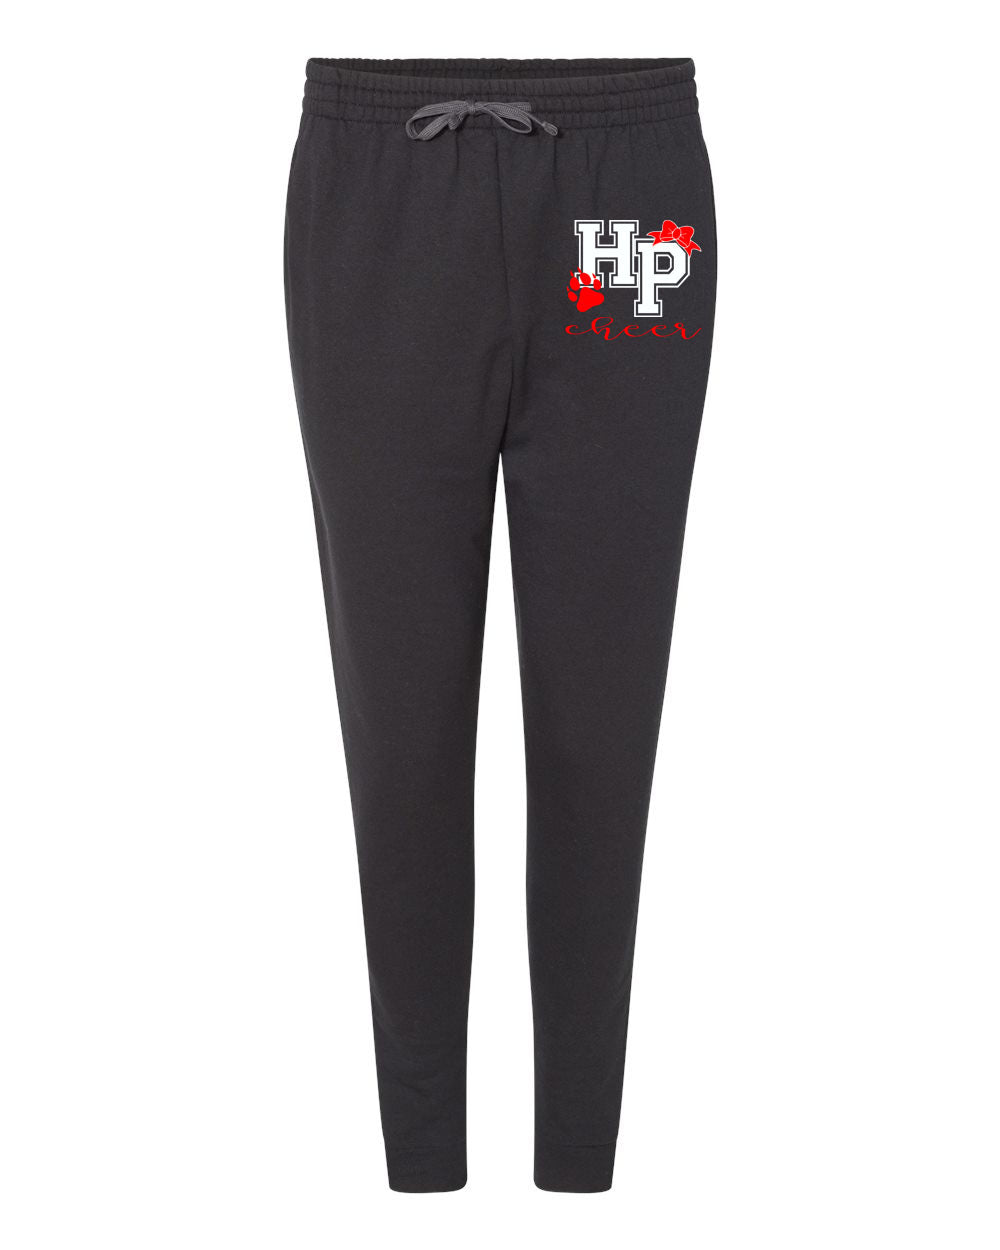 High Point Cheer Design 3 Sweatpants